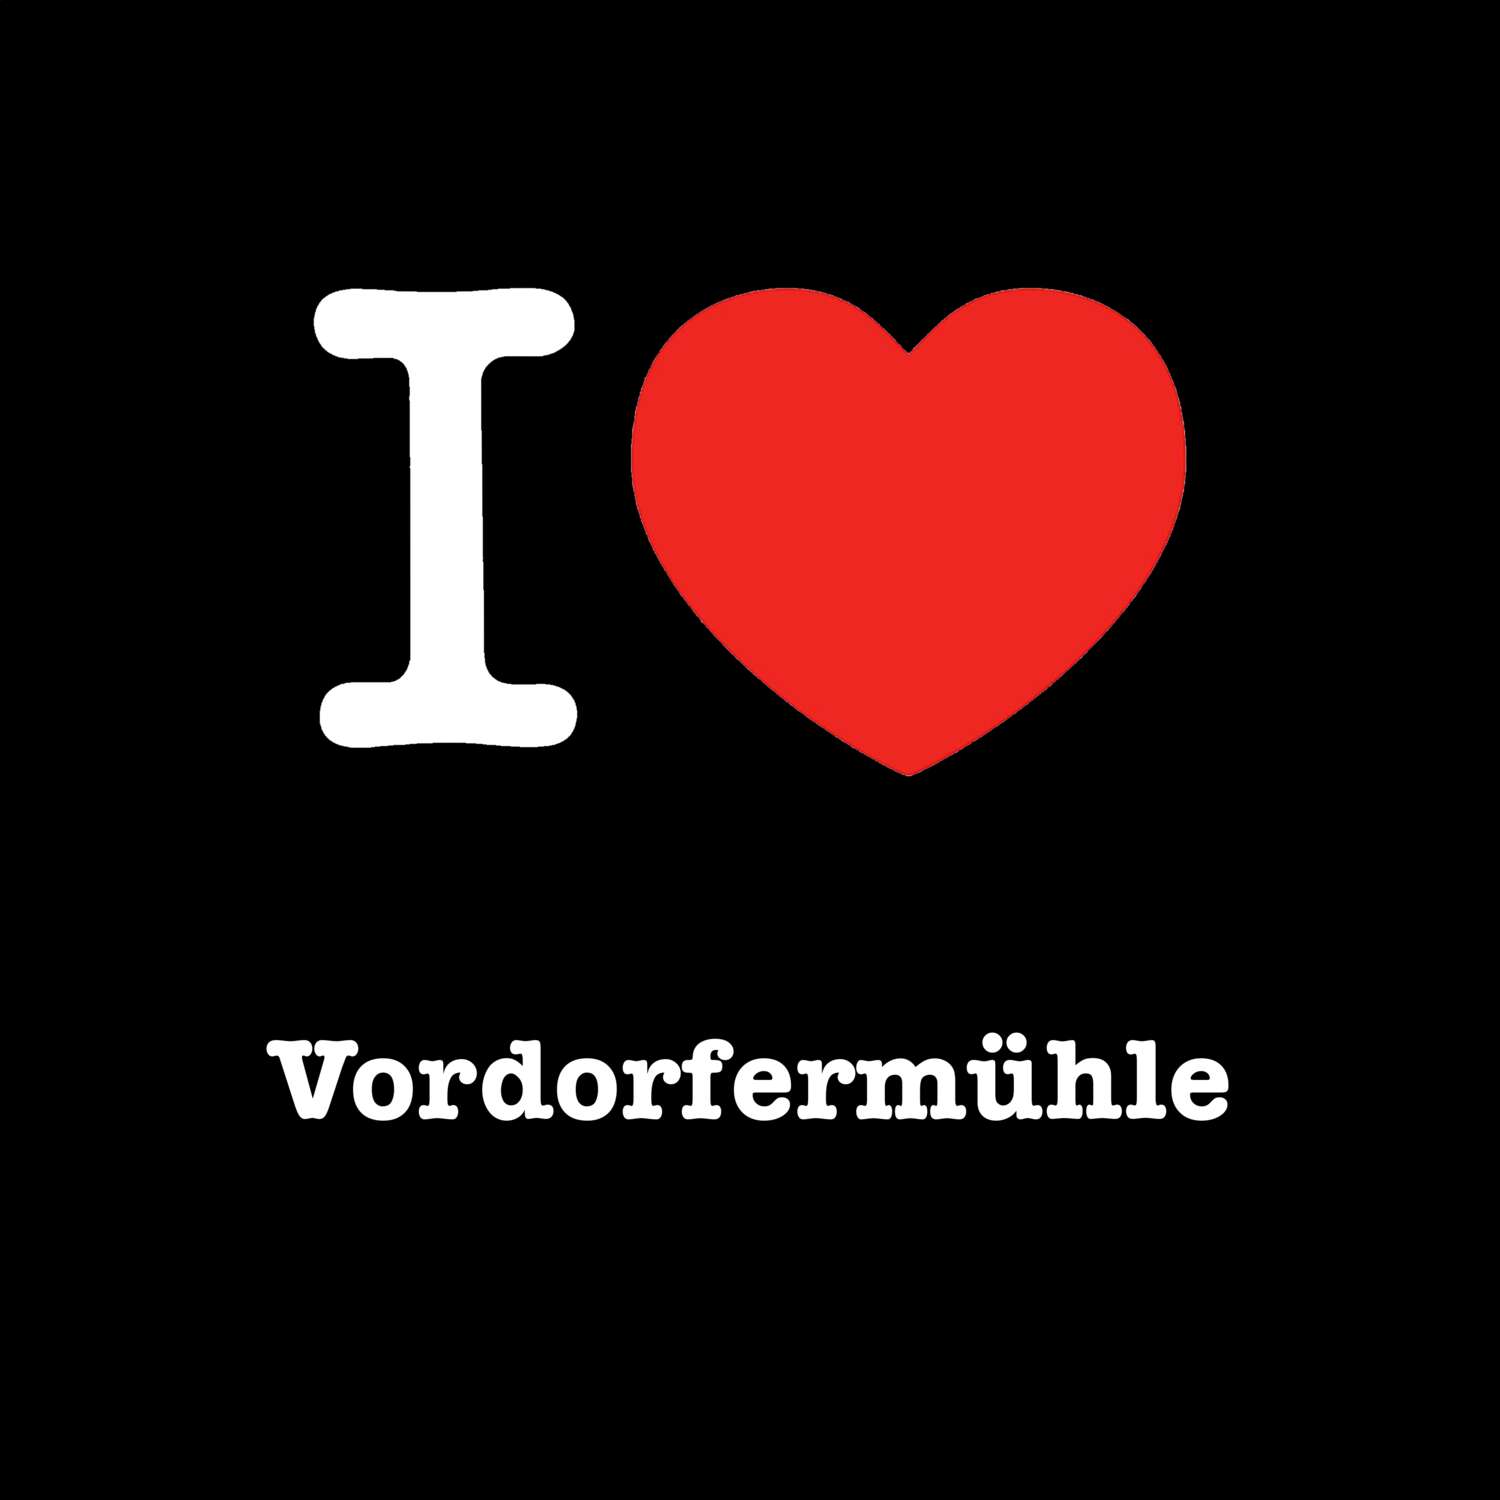 Vordorfermühle T-Shirt »I love«